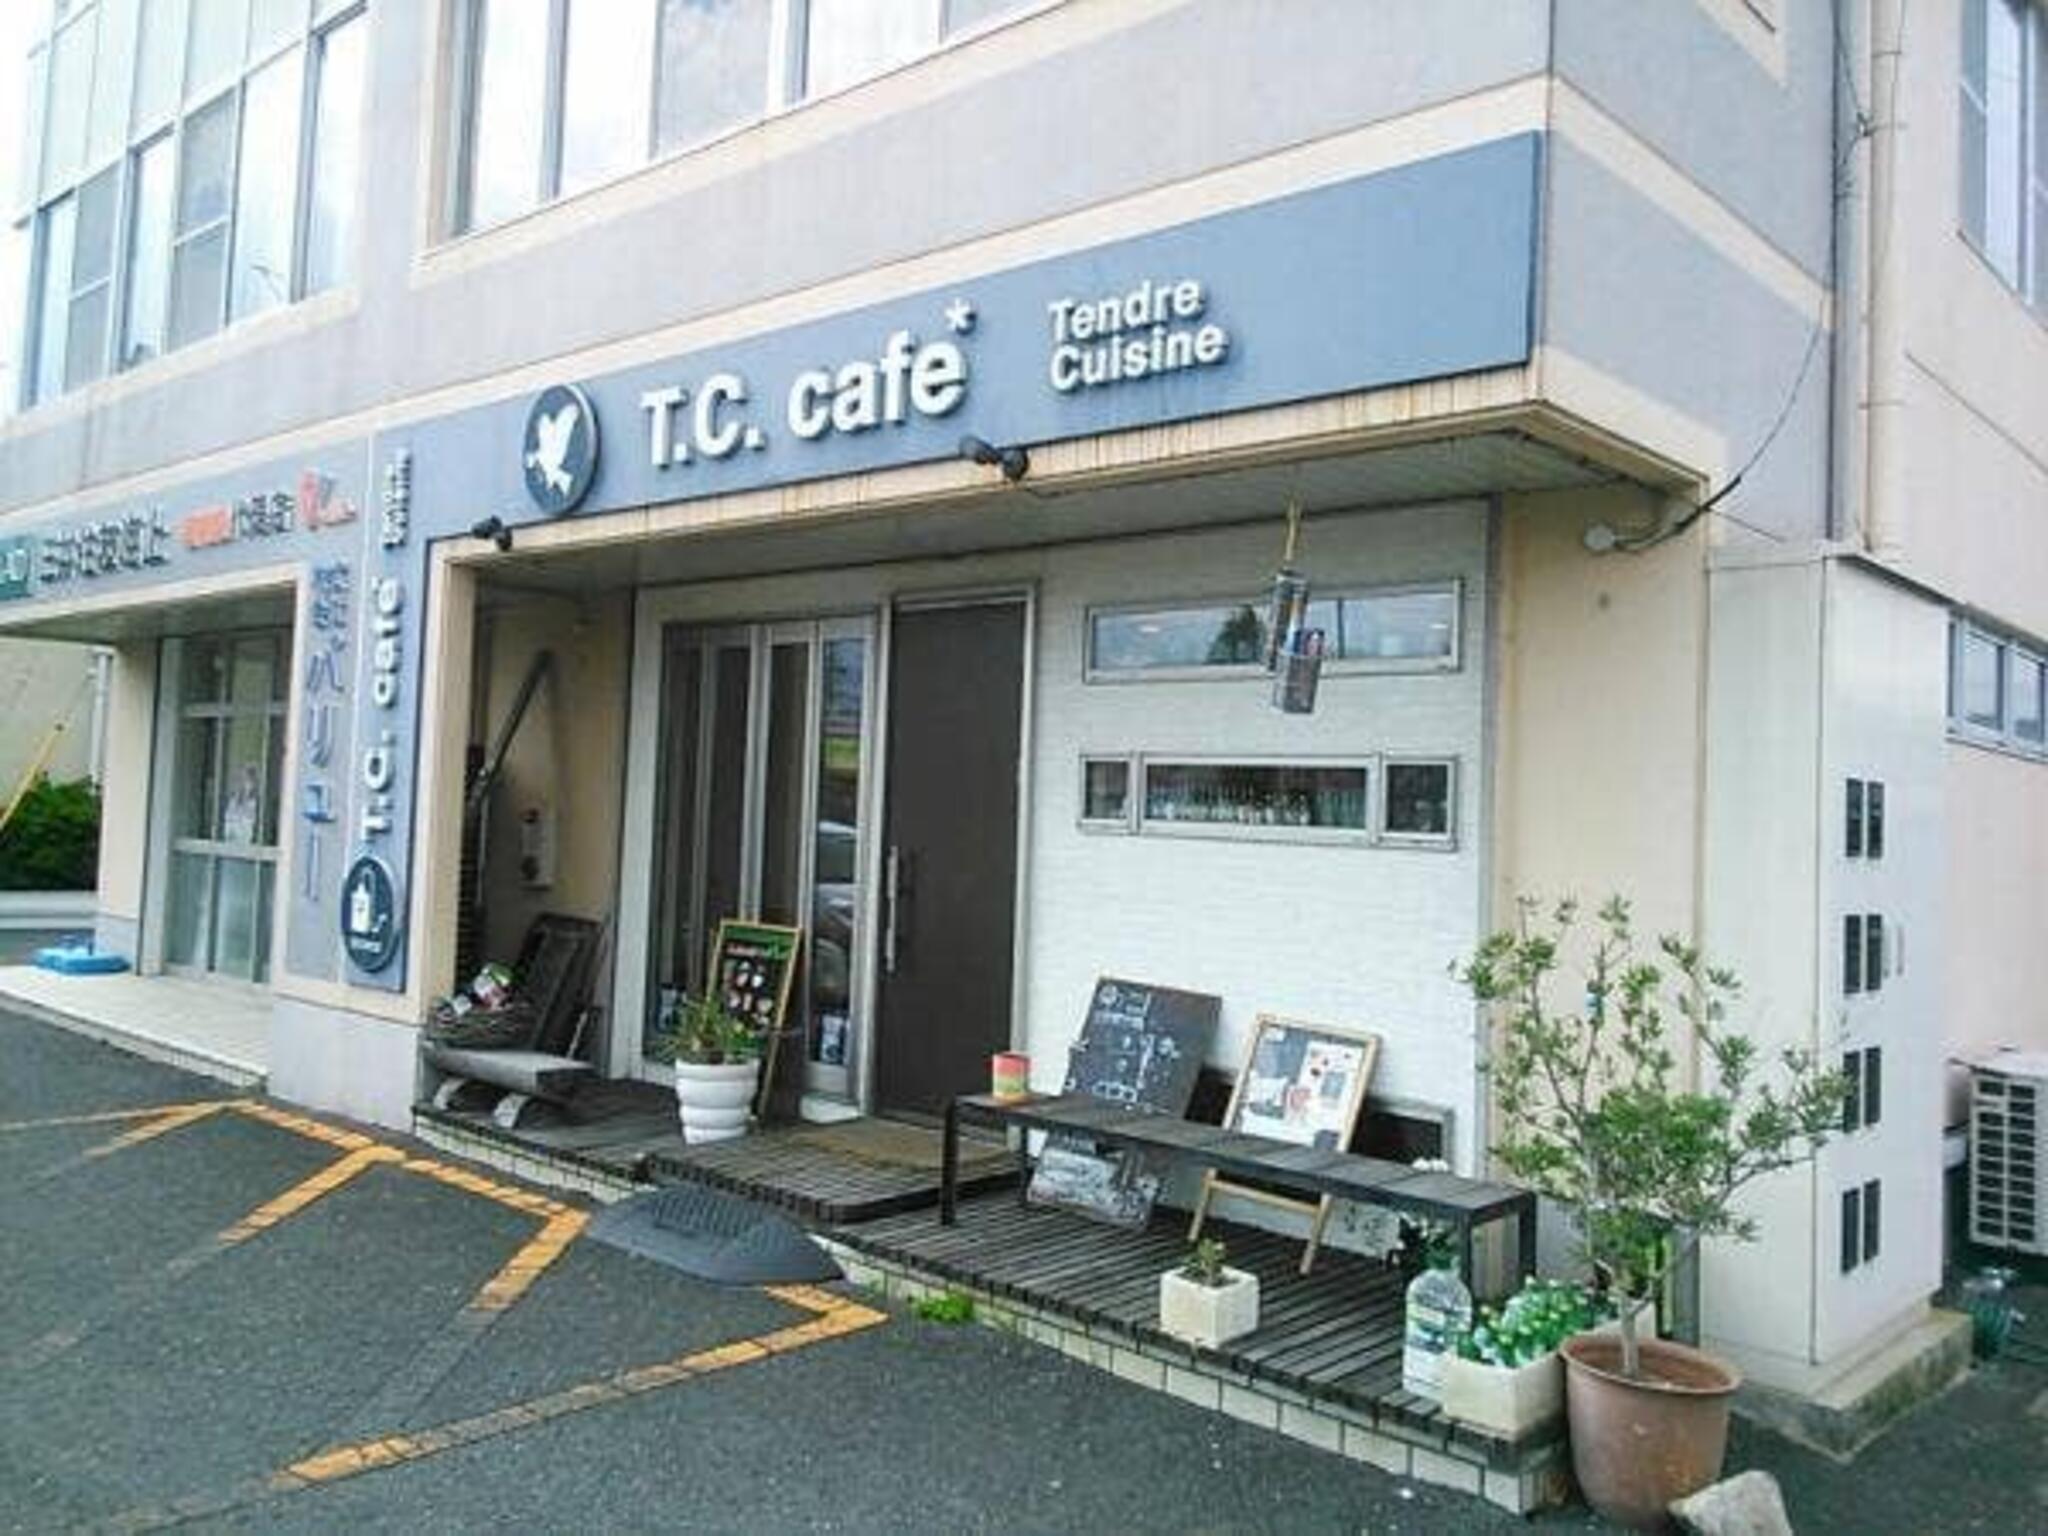 T.C.cafeの代表写真8